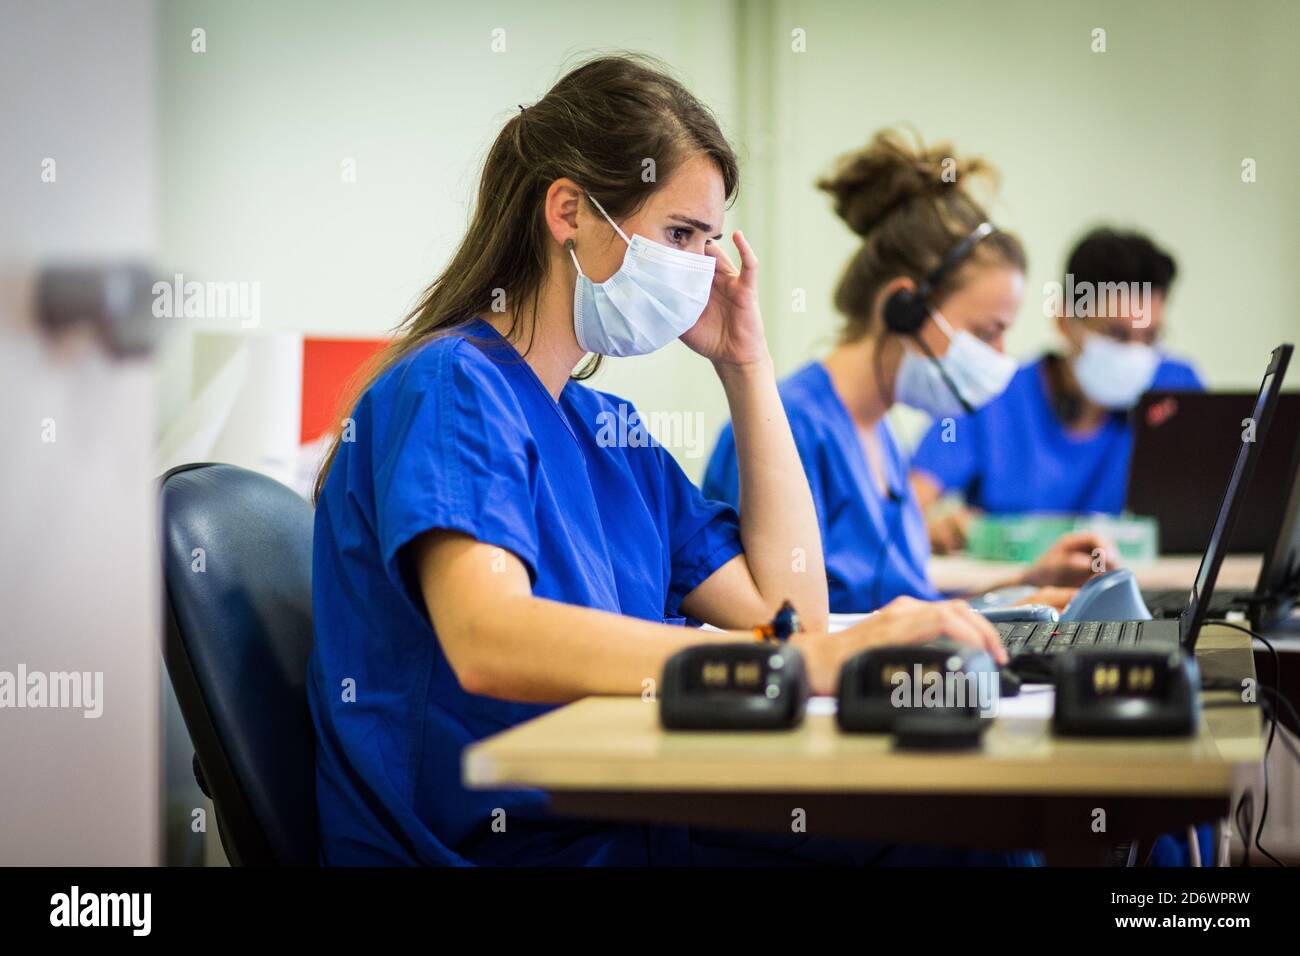 Interns regulating telephone calls. #Coronavirusfrance - COVID-19 Broadband screening platform - Bordeaux University Hospital, France, may 2020. Stock Photo